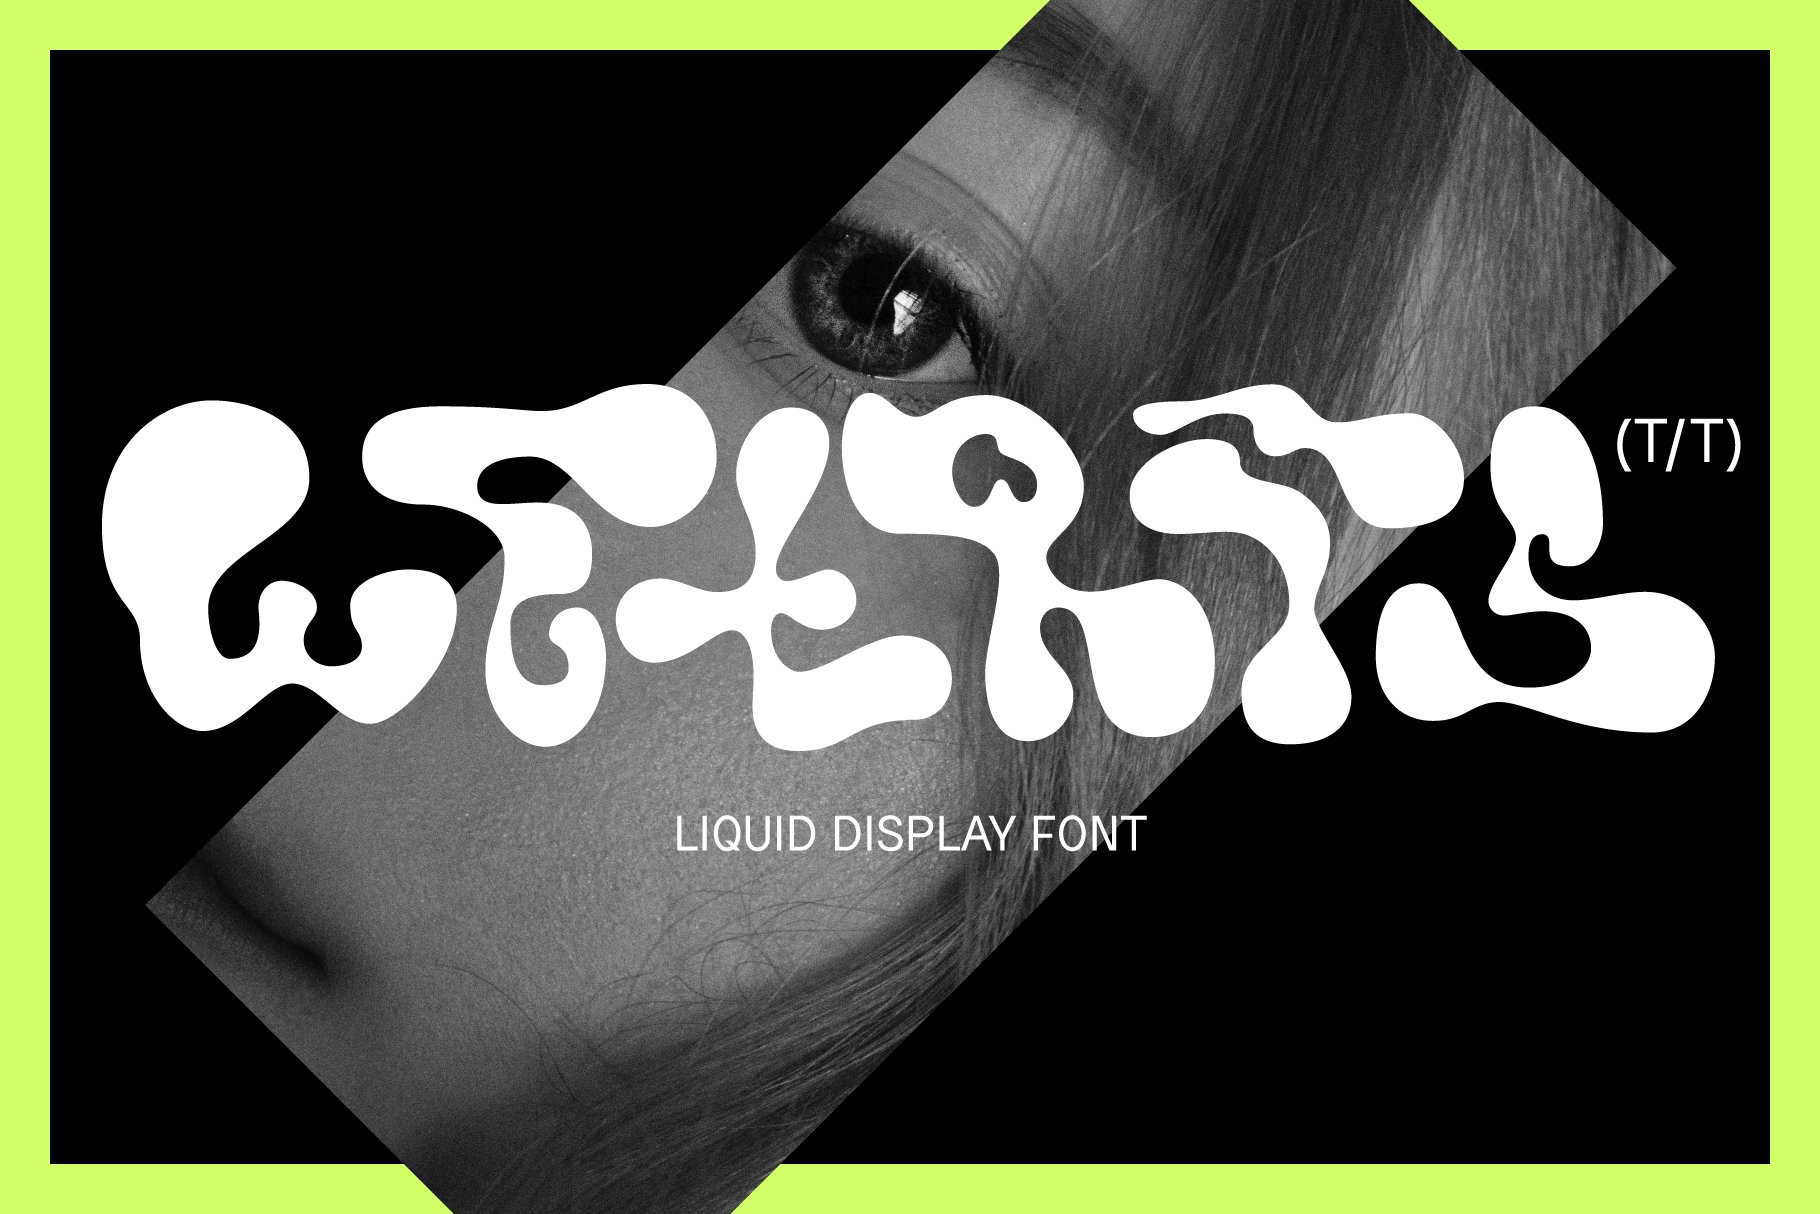 Liquid Type: Wetris Display Font cover image.